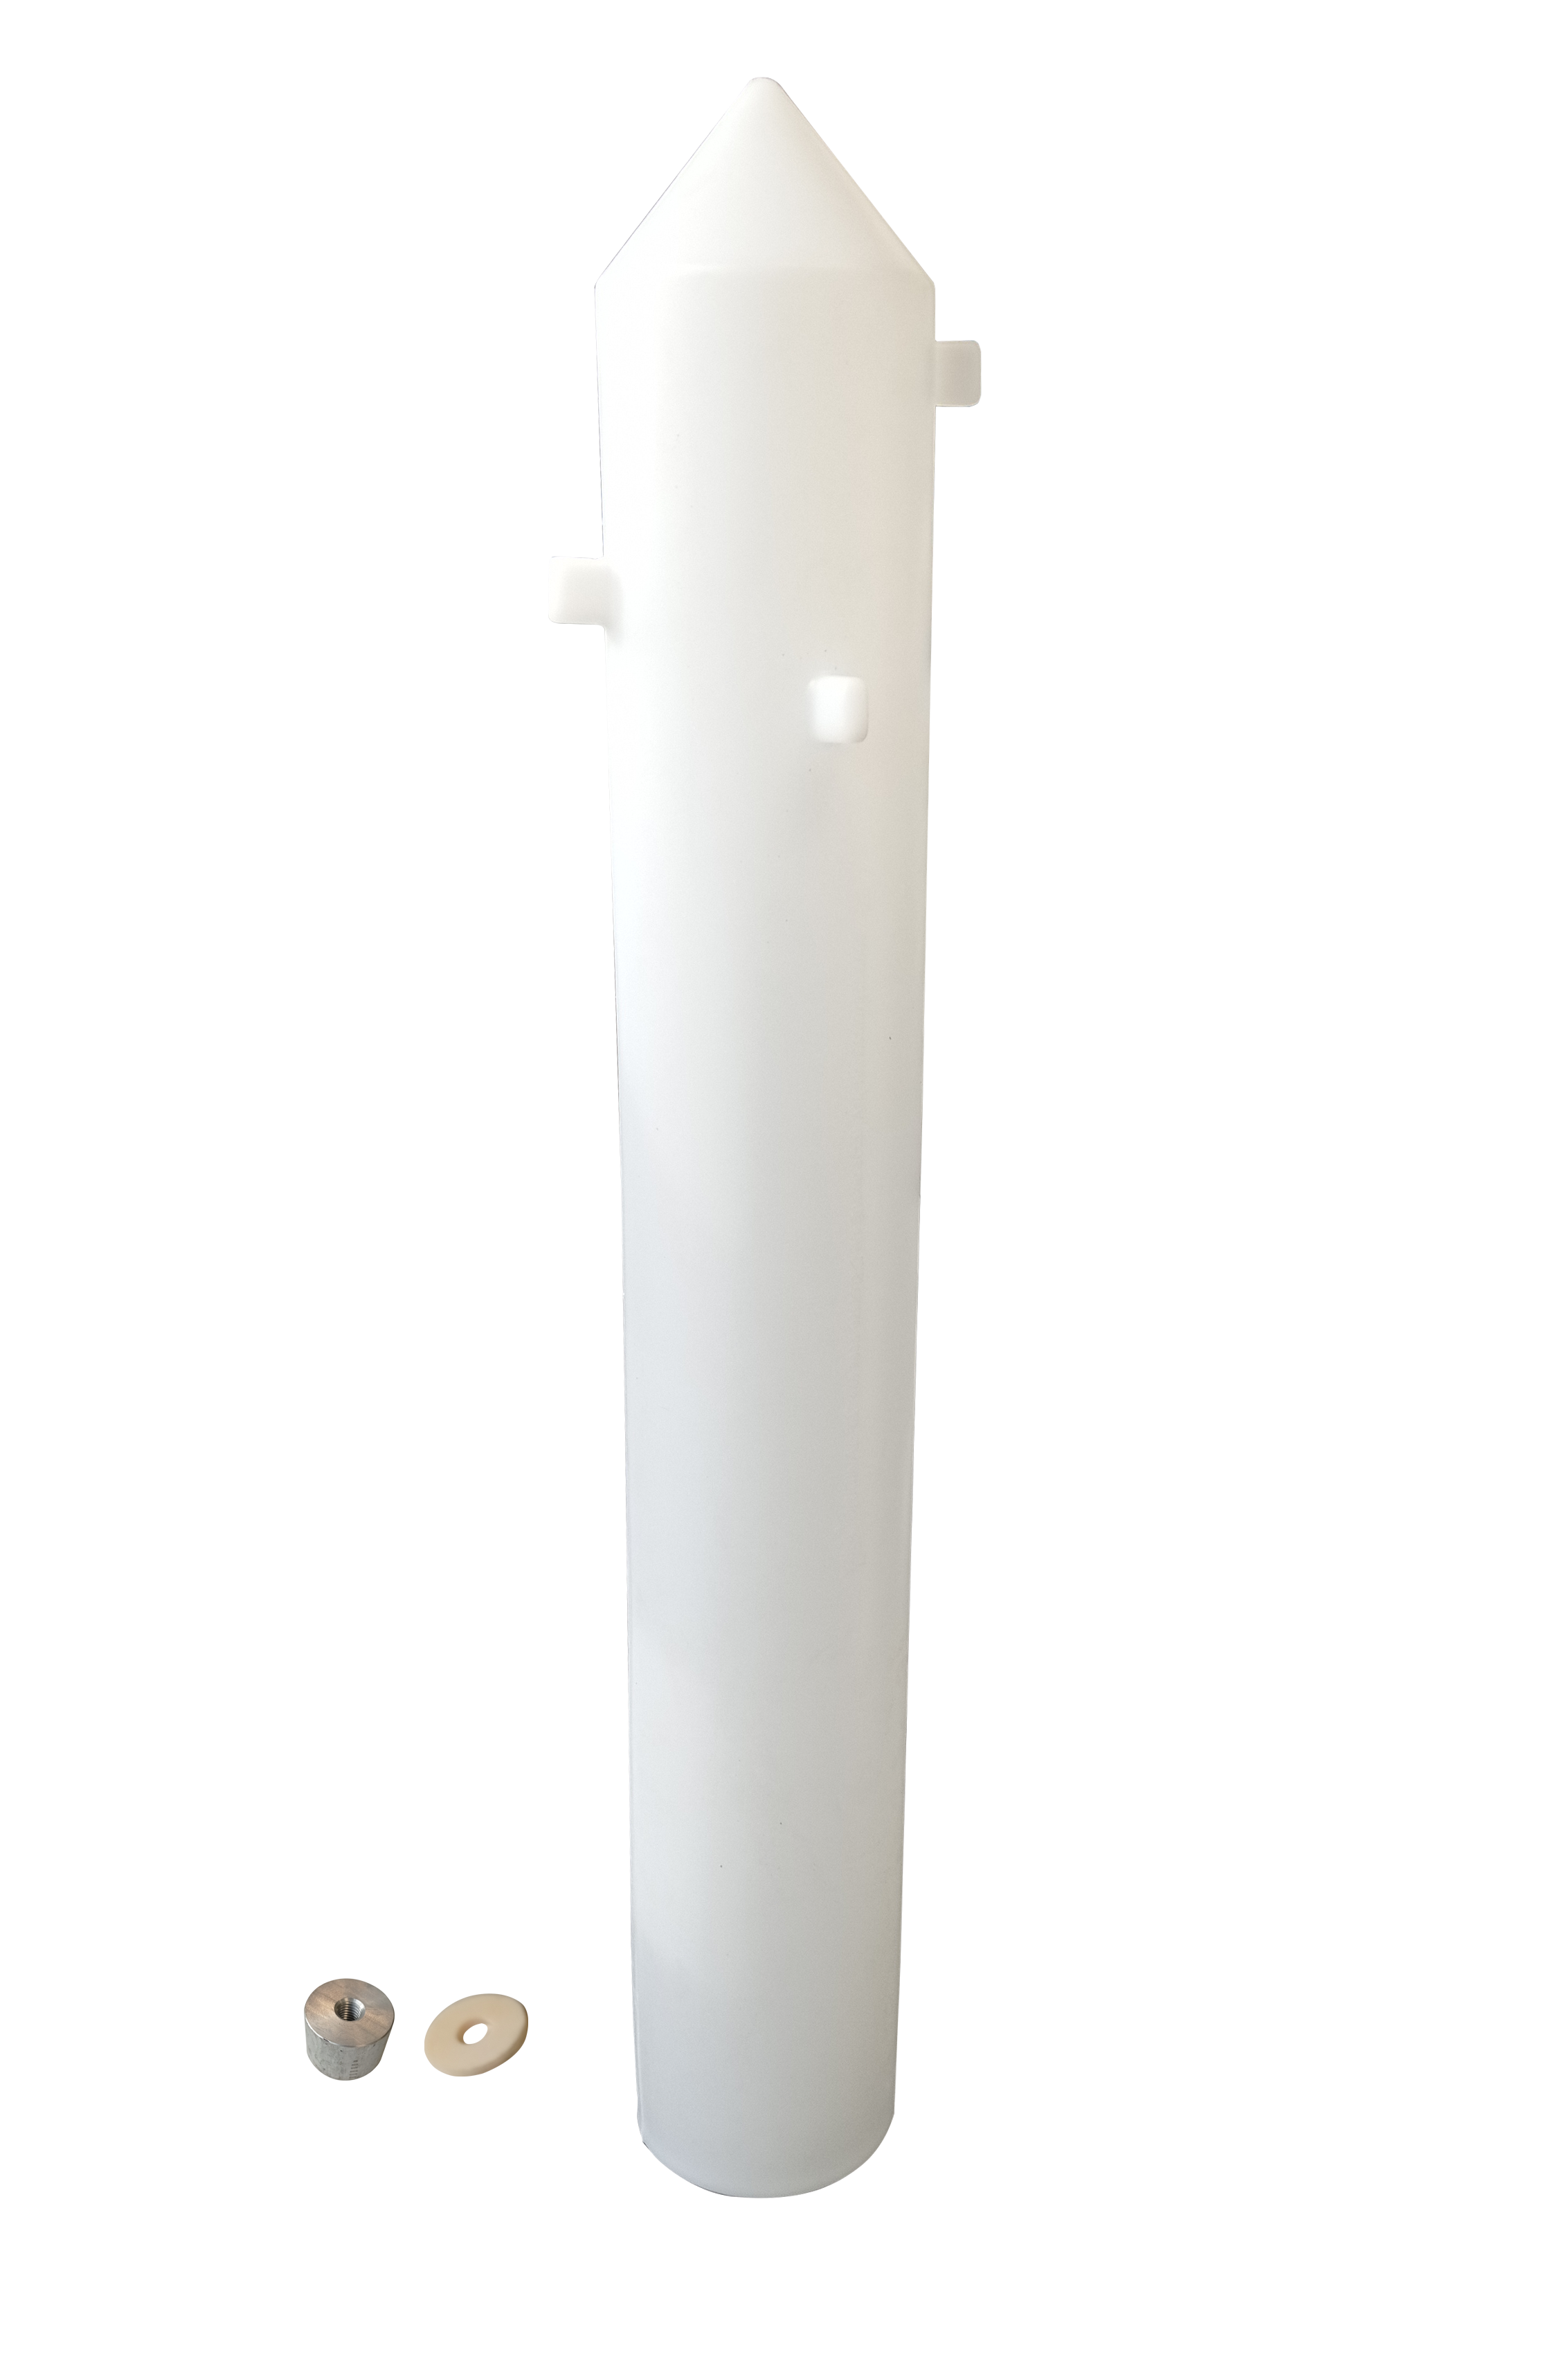 Plastic cone for filter cartridge